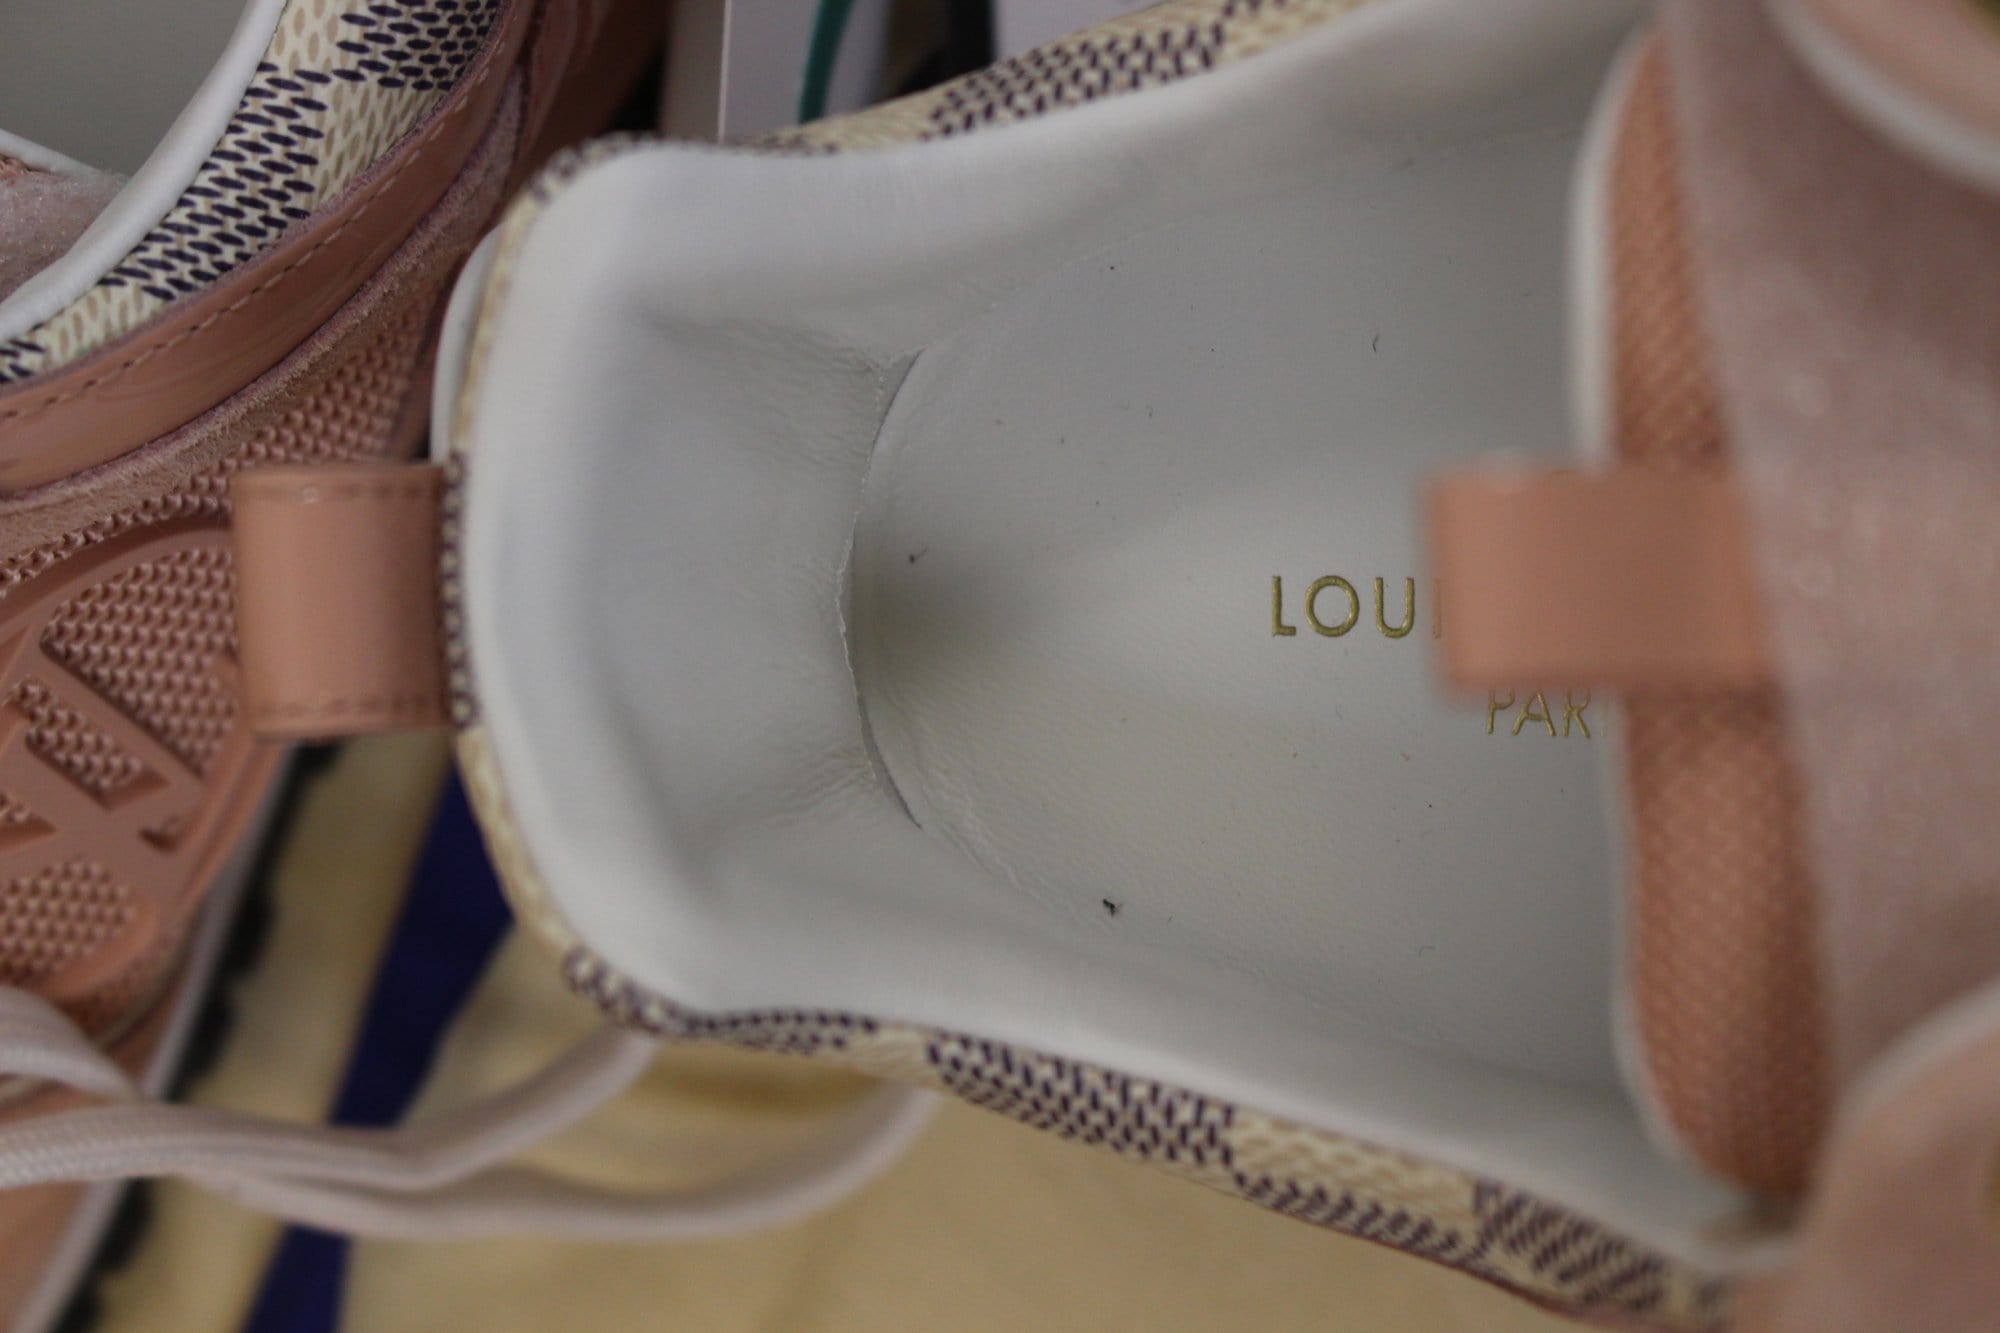 LOUIS VUITTON Suede Damier Azur Run Away Sneakers 37.5 Pink 248988